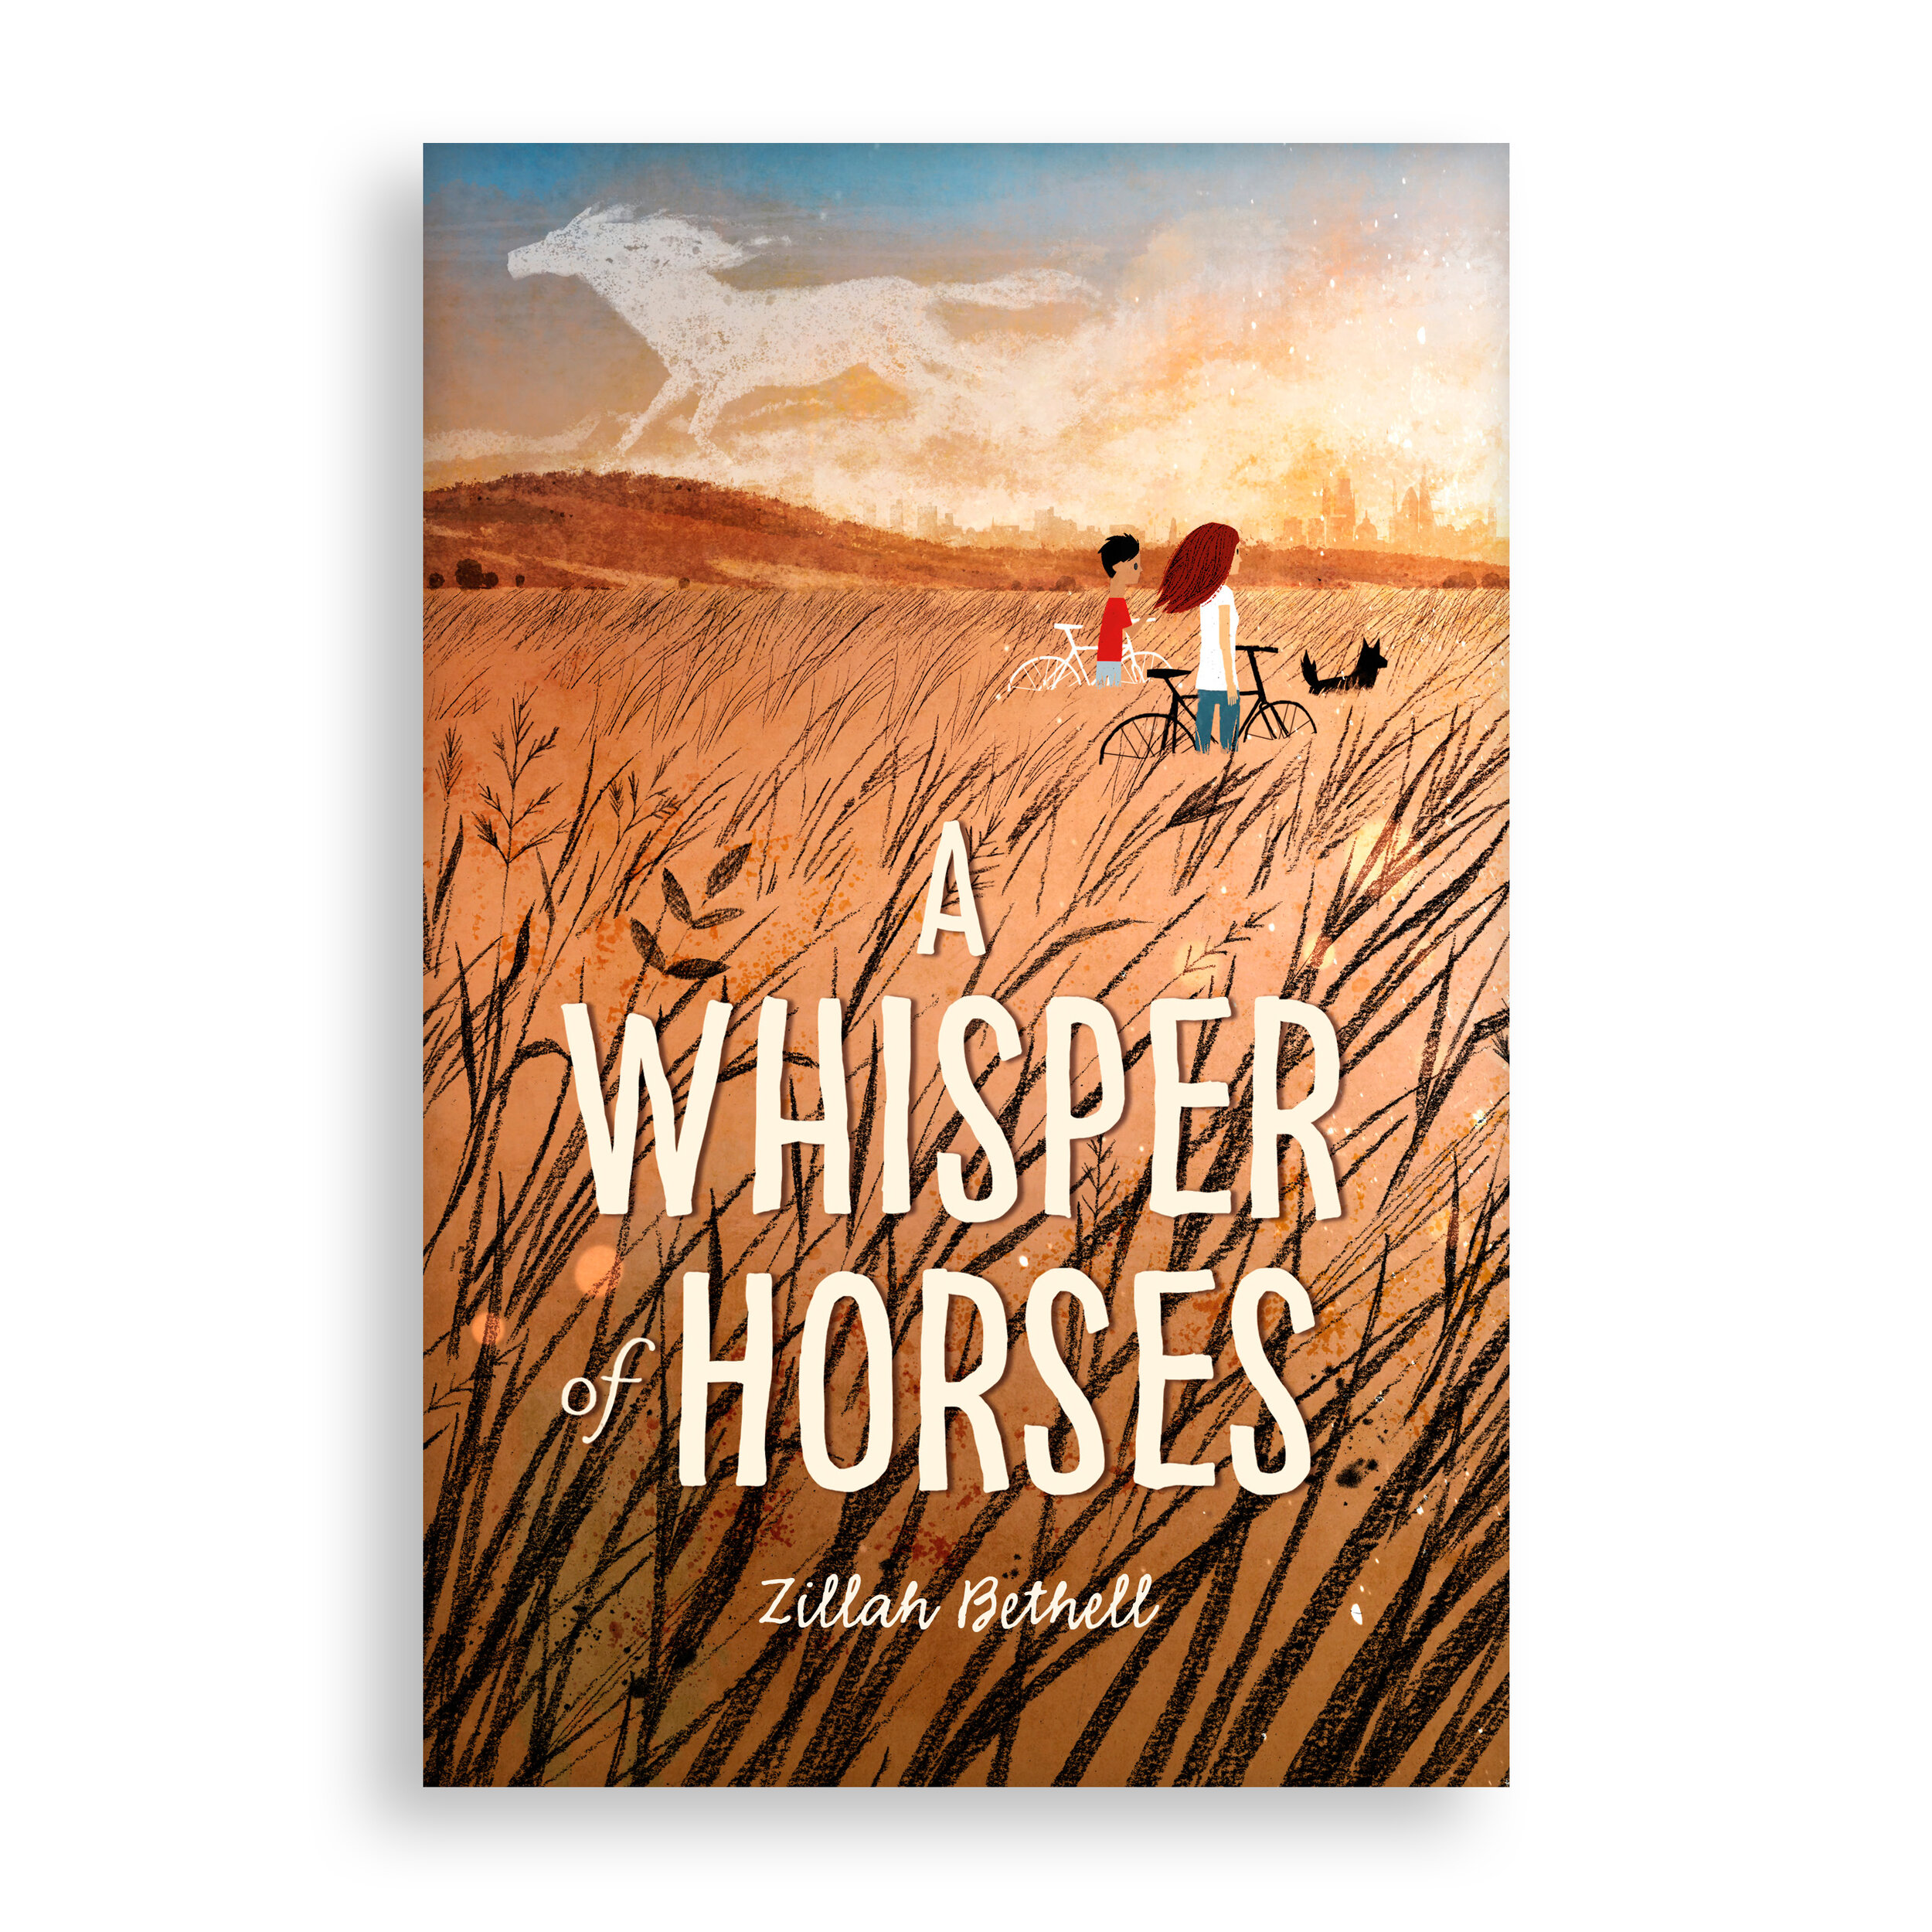 A Whisper of Horses